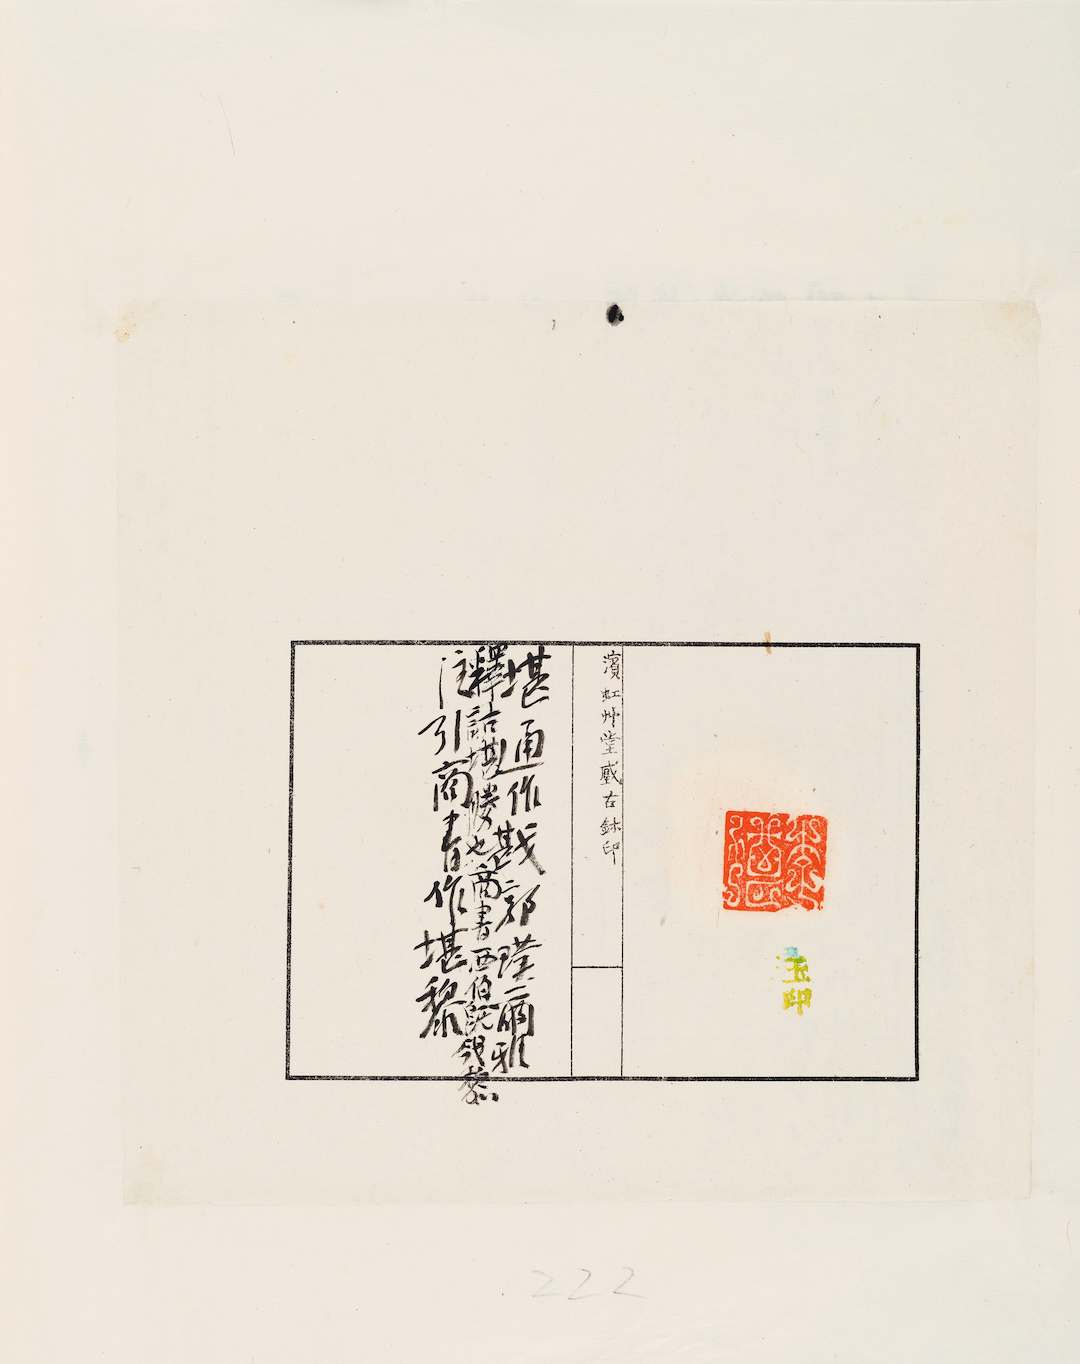 Huang Binhong's collection of "Li Kan" white seals Interpretation